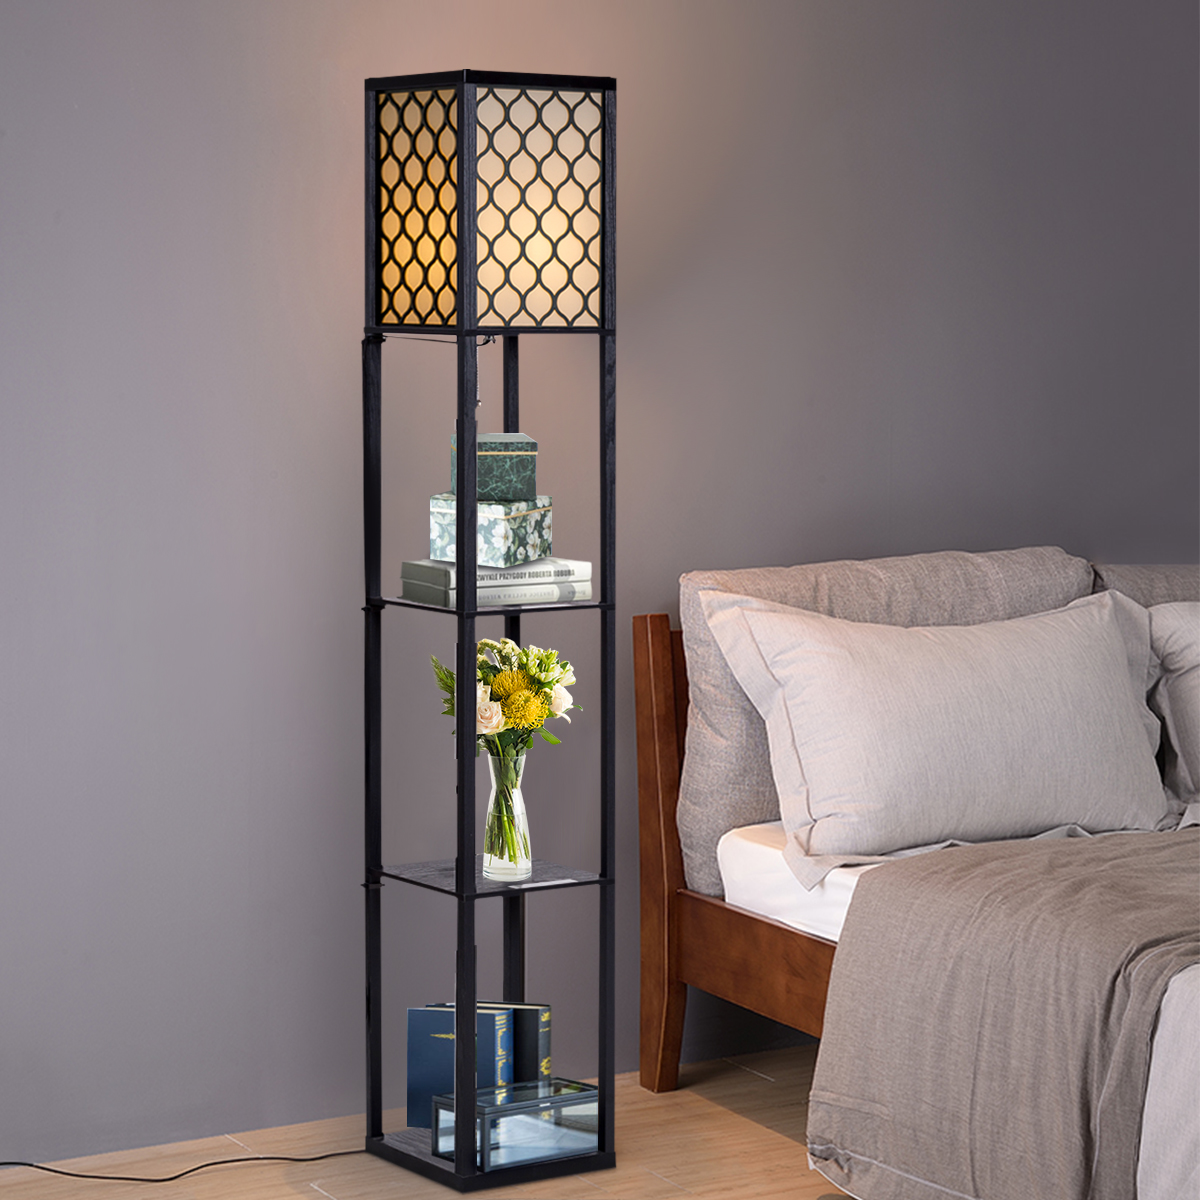 Vloerlamp Plank Moderne Binnenverlichting met 3-Level Vloerlamp 160 x 26 x 26 cm